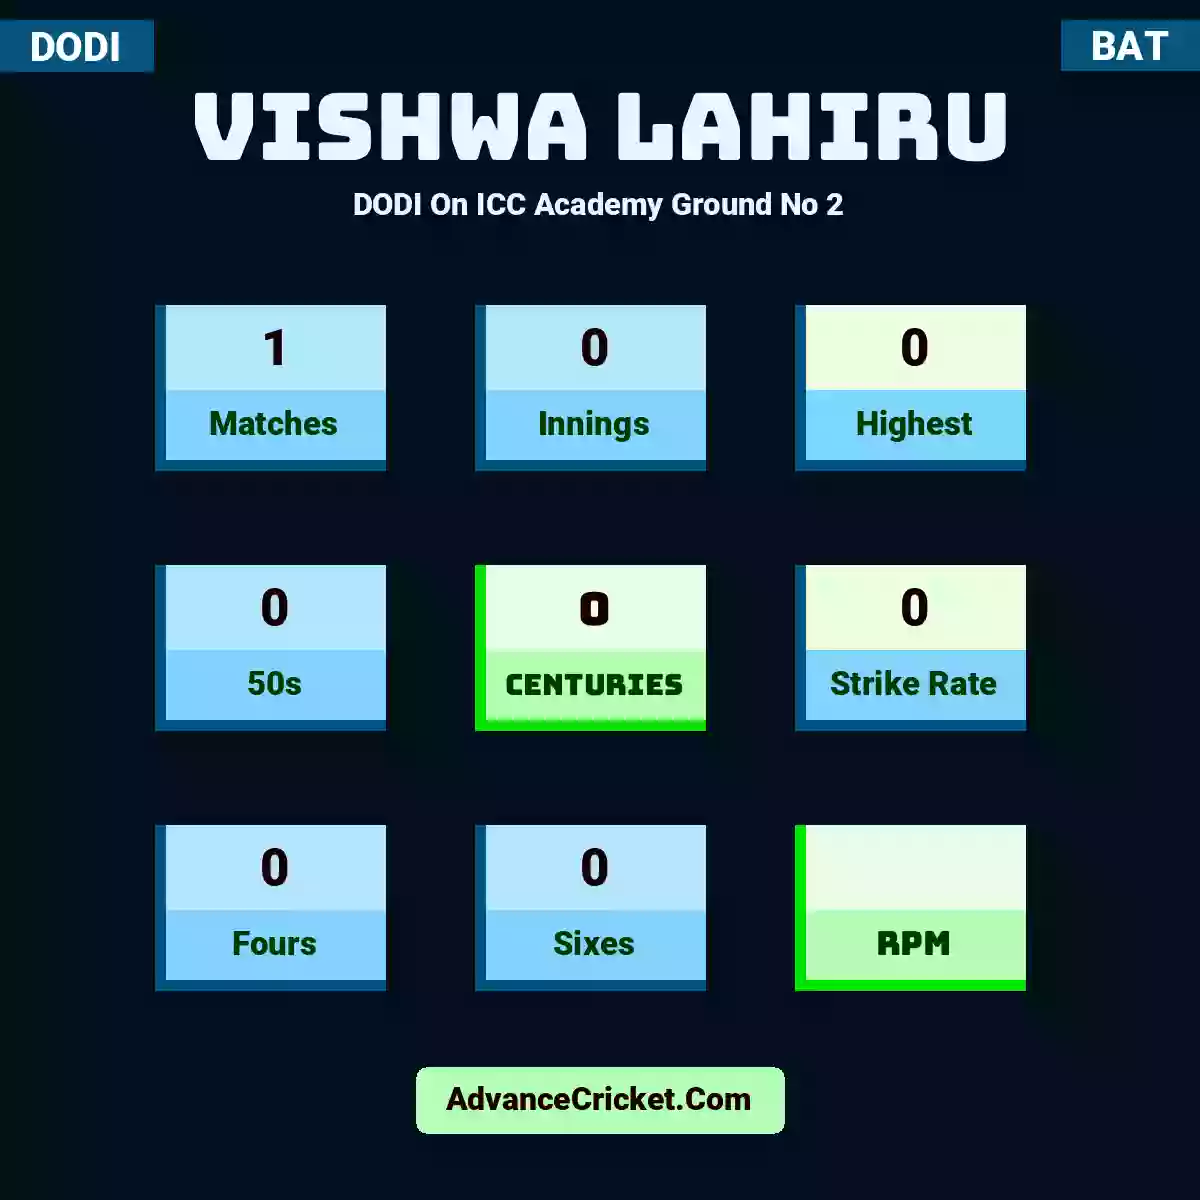 Vishwa Lahiru DODI  On ICC Academy Ground No 2, Vishwa Lahiru played 1 matches, scored 0 runs as highest, 0 half-centuries, and 0 centuries, with a strike rate of 0. V.Lahiru hit 0 fours and 0 sixes.